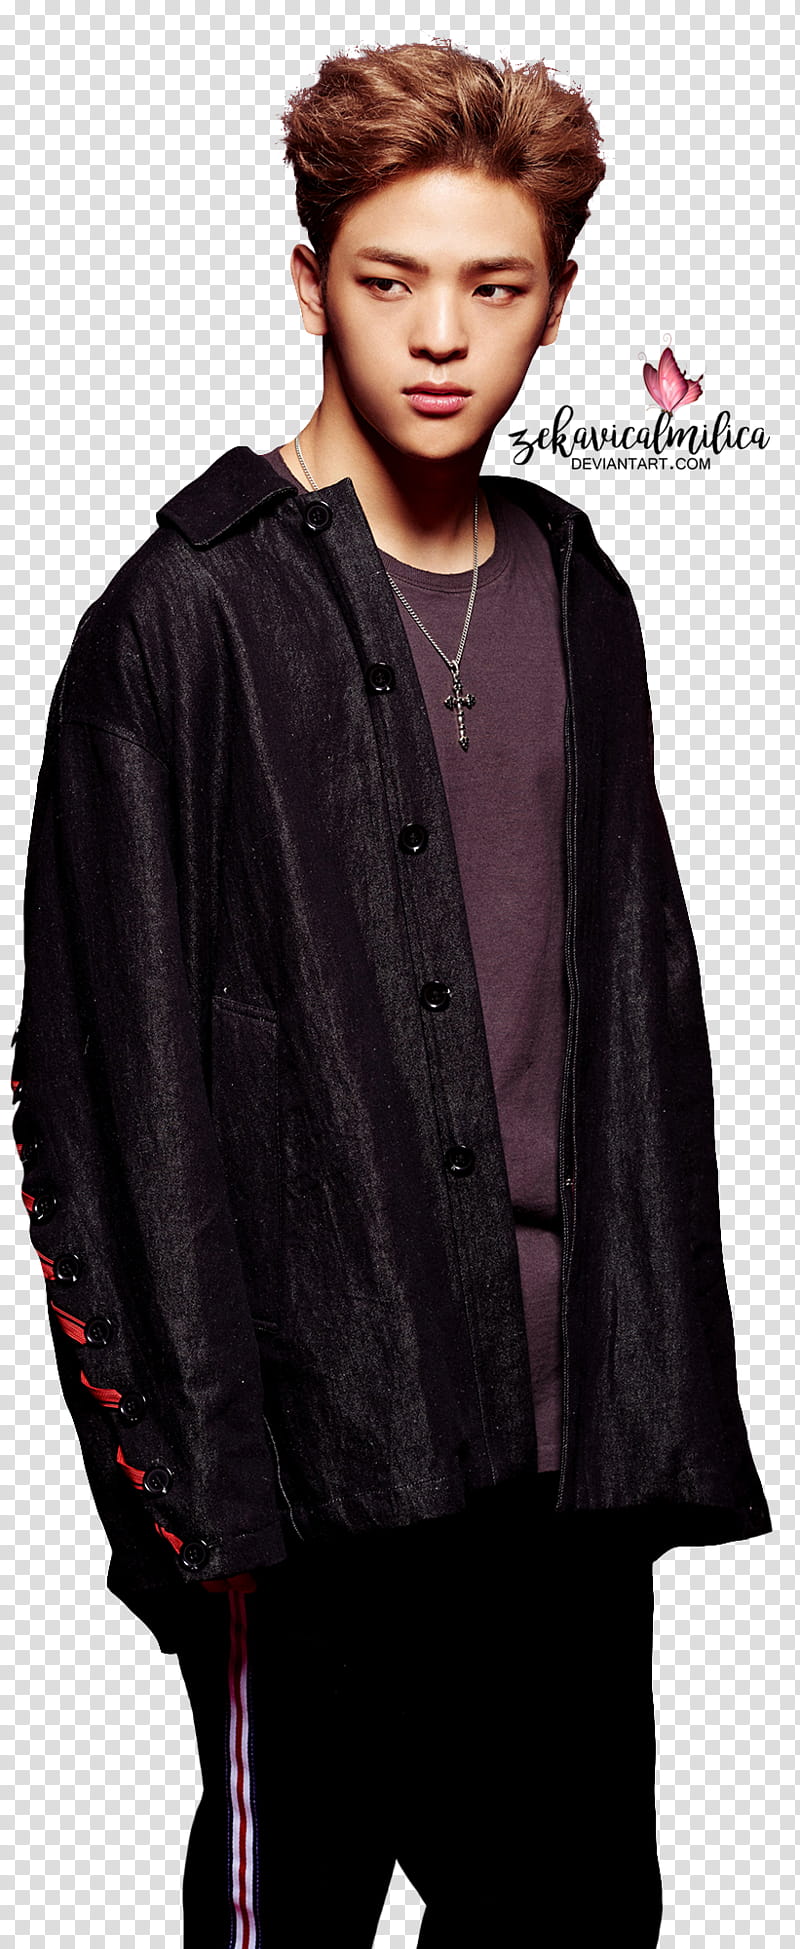 Stray Kids, standing man wearing black jacket transparent background PNG clipart